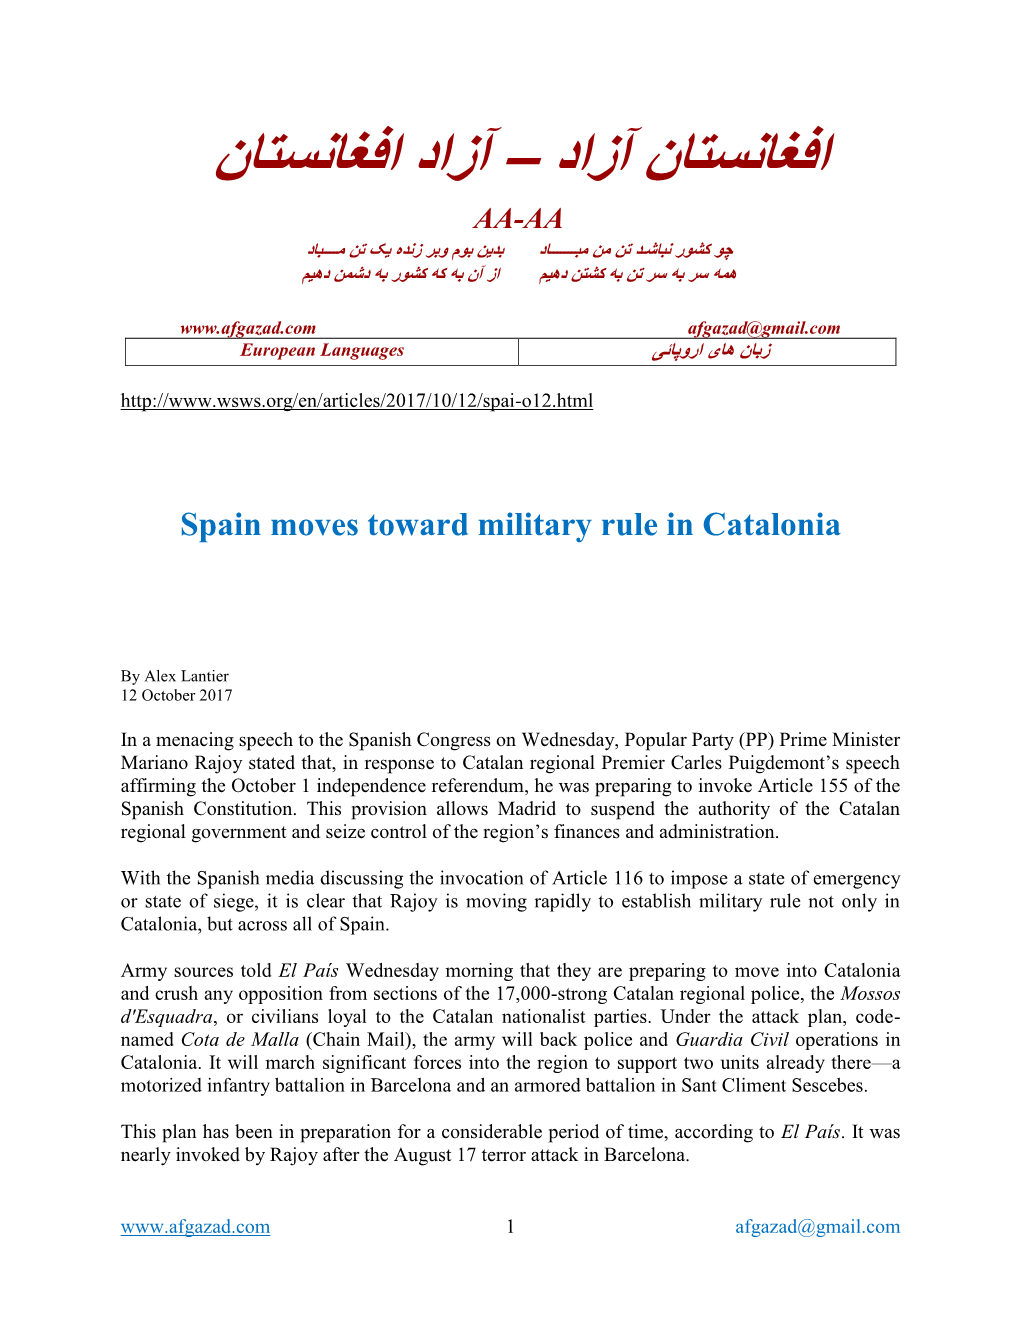 Spain Moves Toward Military Rule in Catalonia